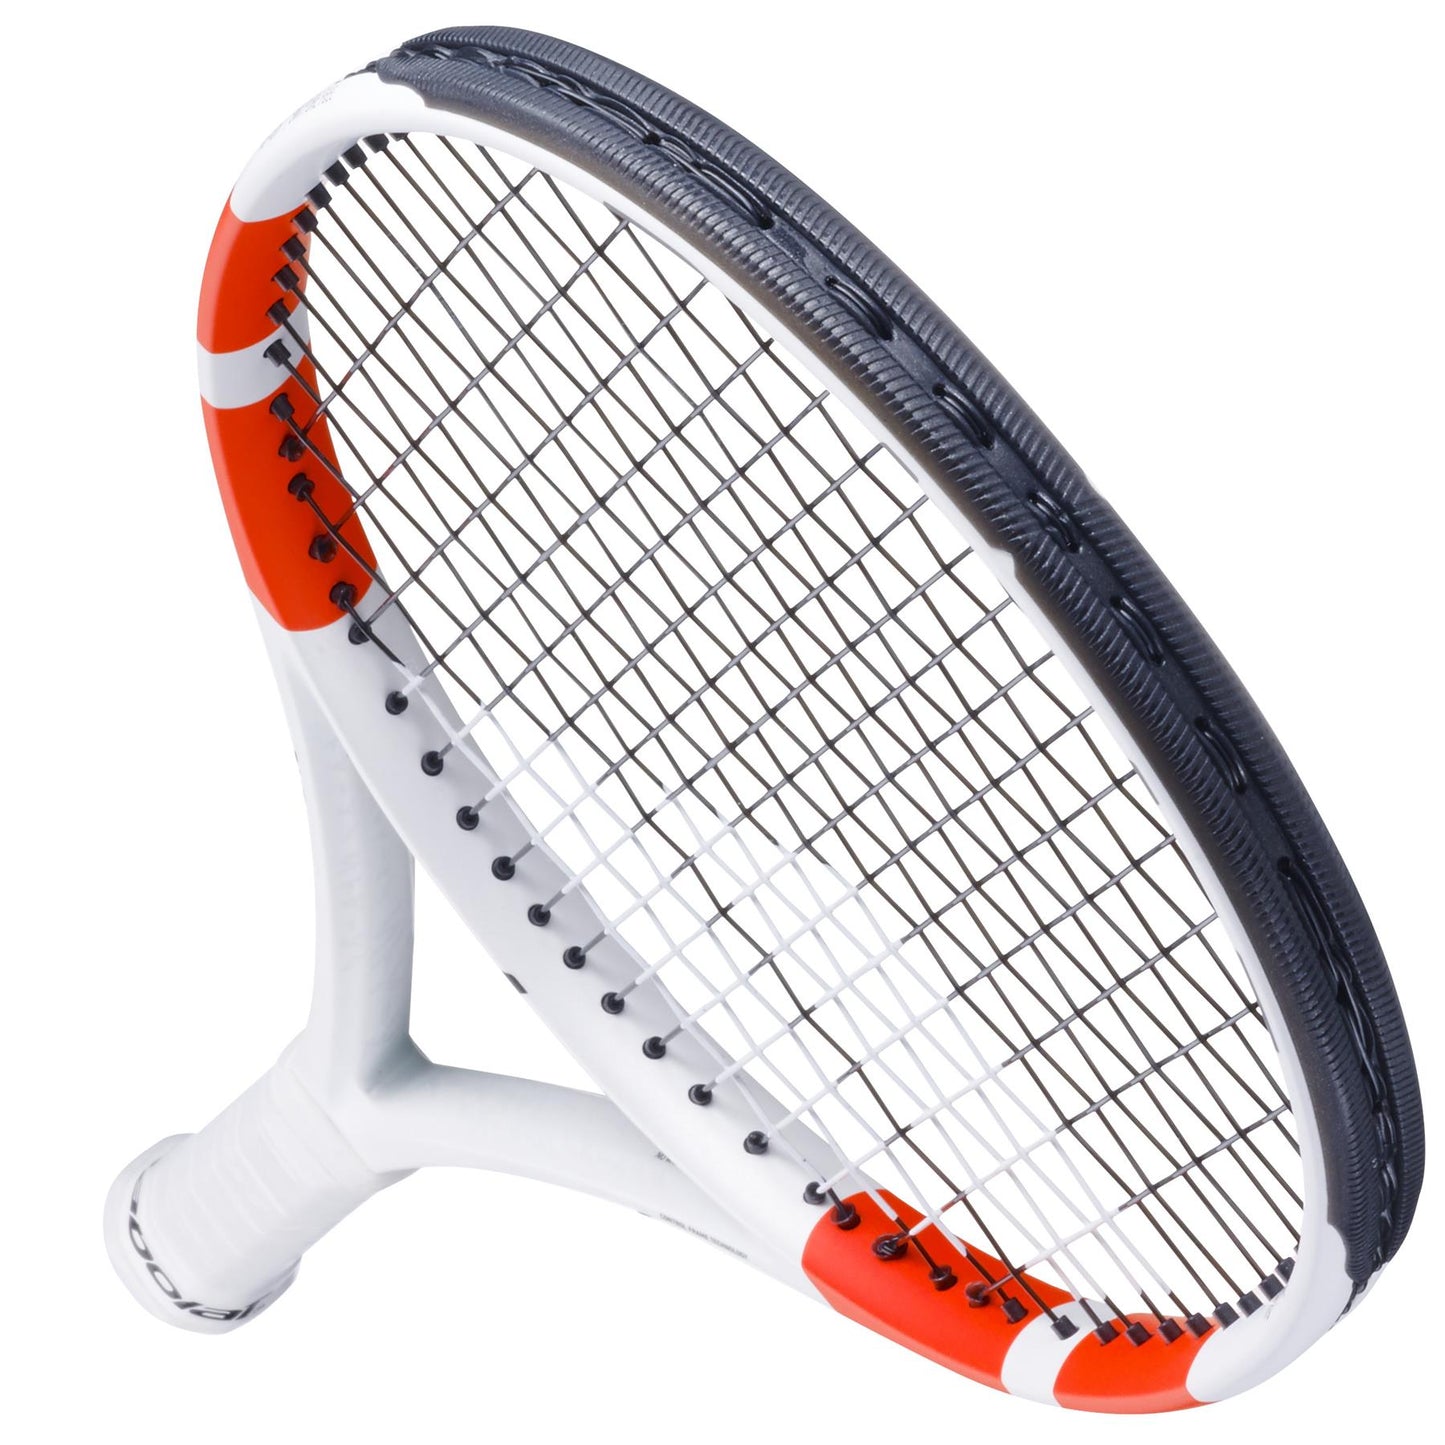 Babolat Pure Strike Junior 26 Gen4 Tennis Racket - White / Red / Black - Top